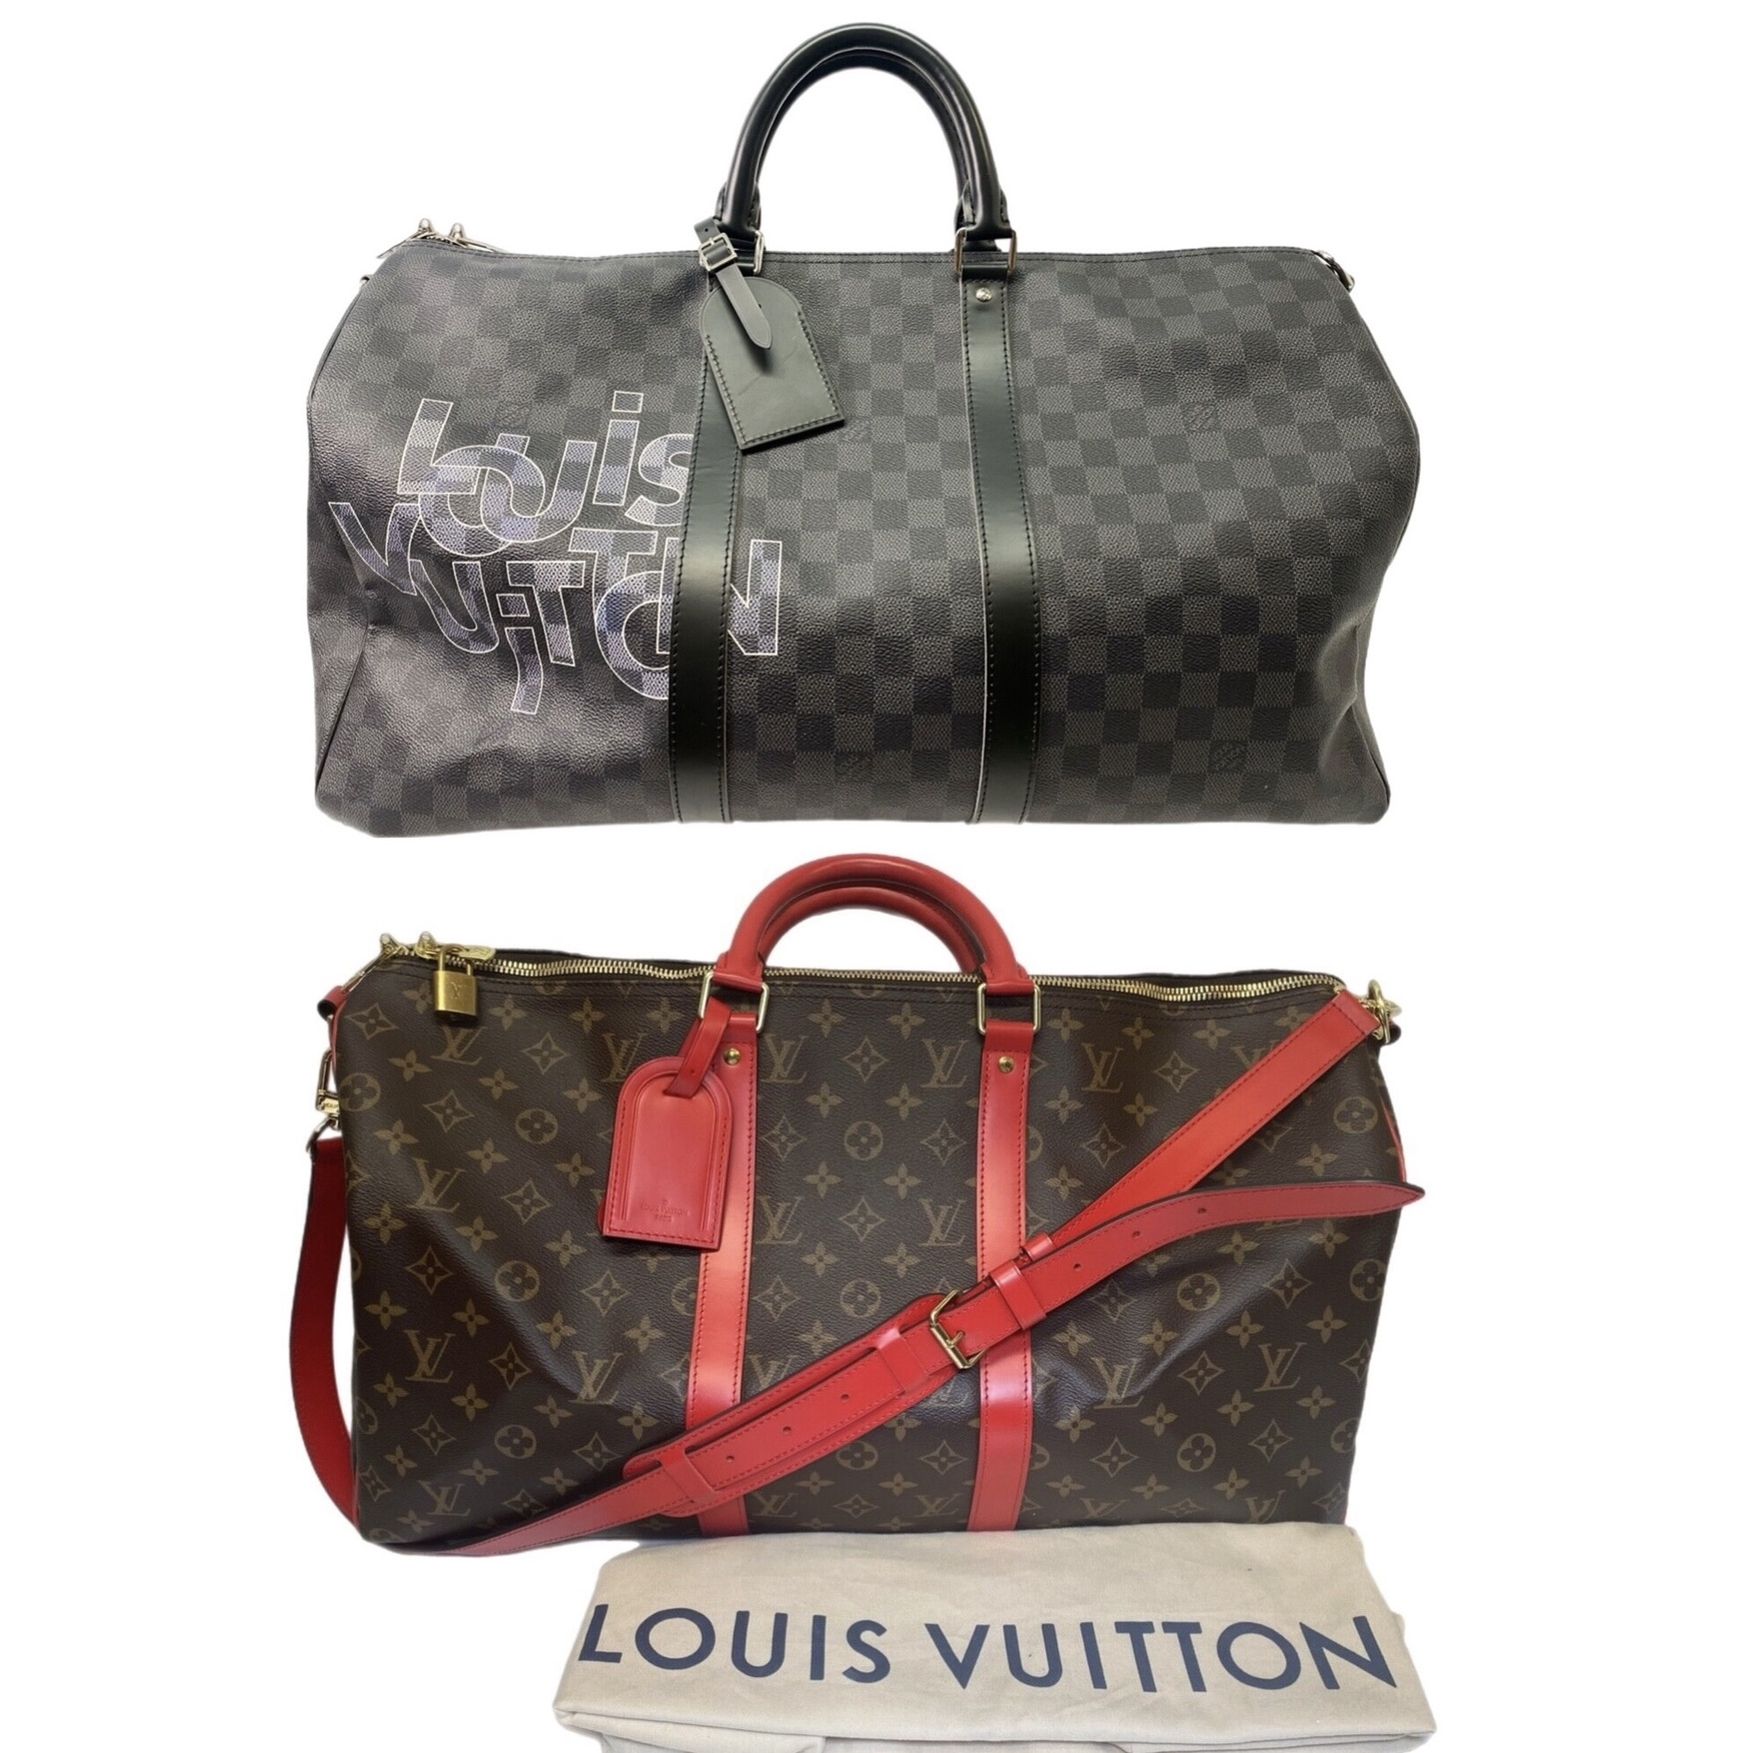 Louis Vuitton Keepall Bandouliere Graphite Black Duffle Bag - Bandouliere 50 Unisex Brown Red Monogram Boston Bag - PRICE FOR EACH IN DESCRIPTION 